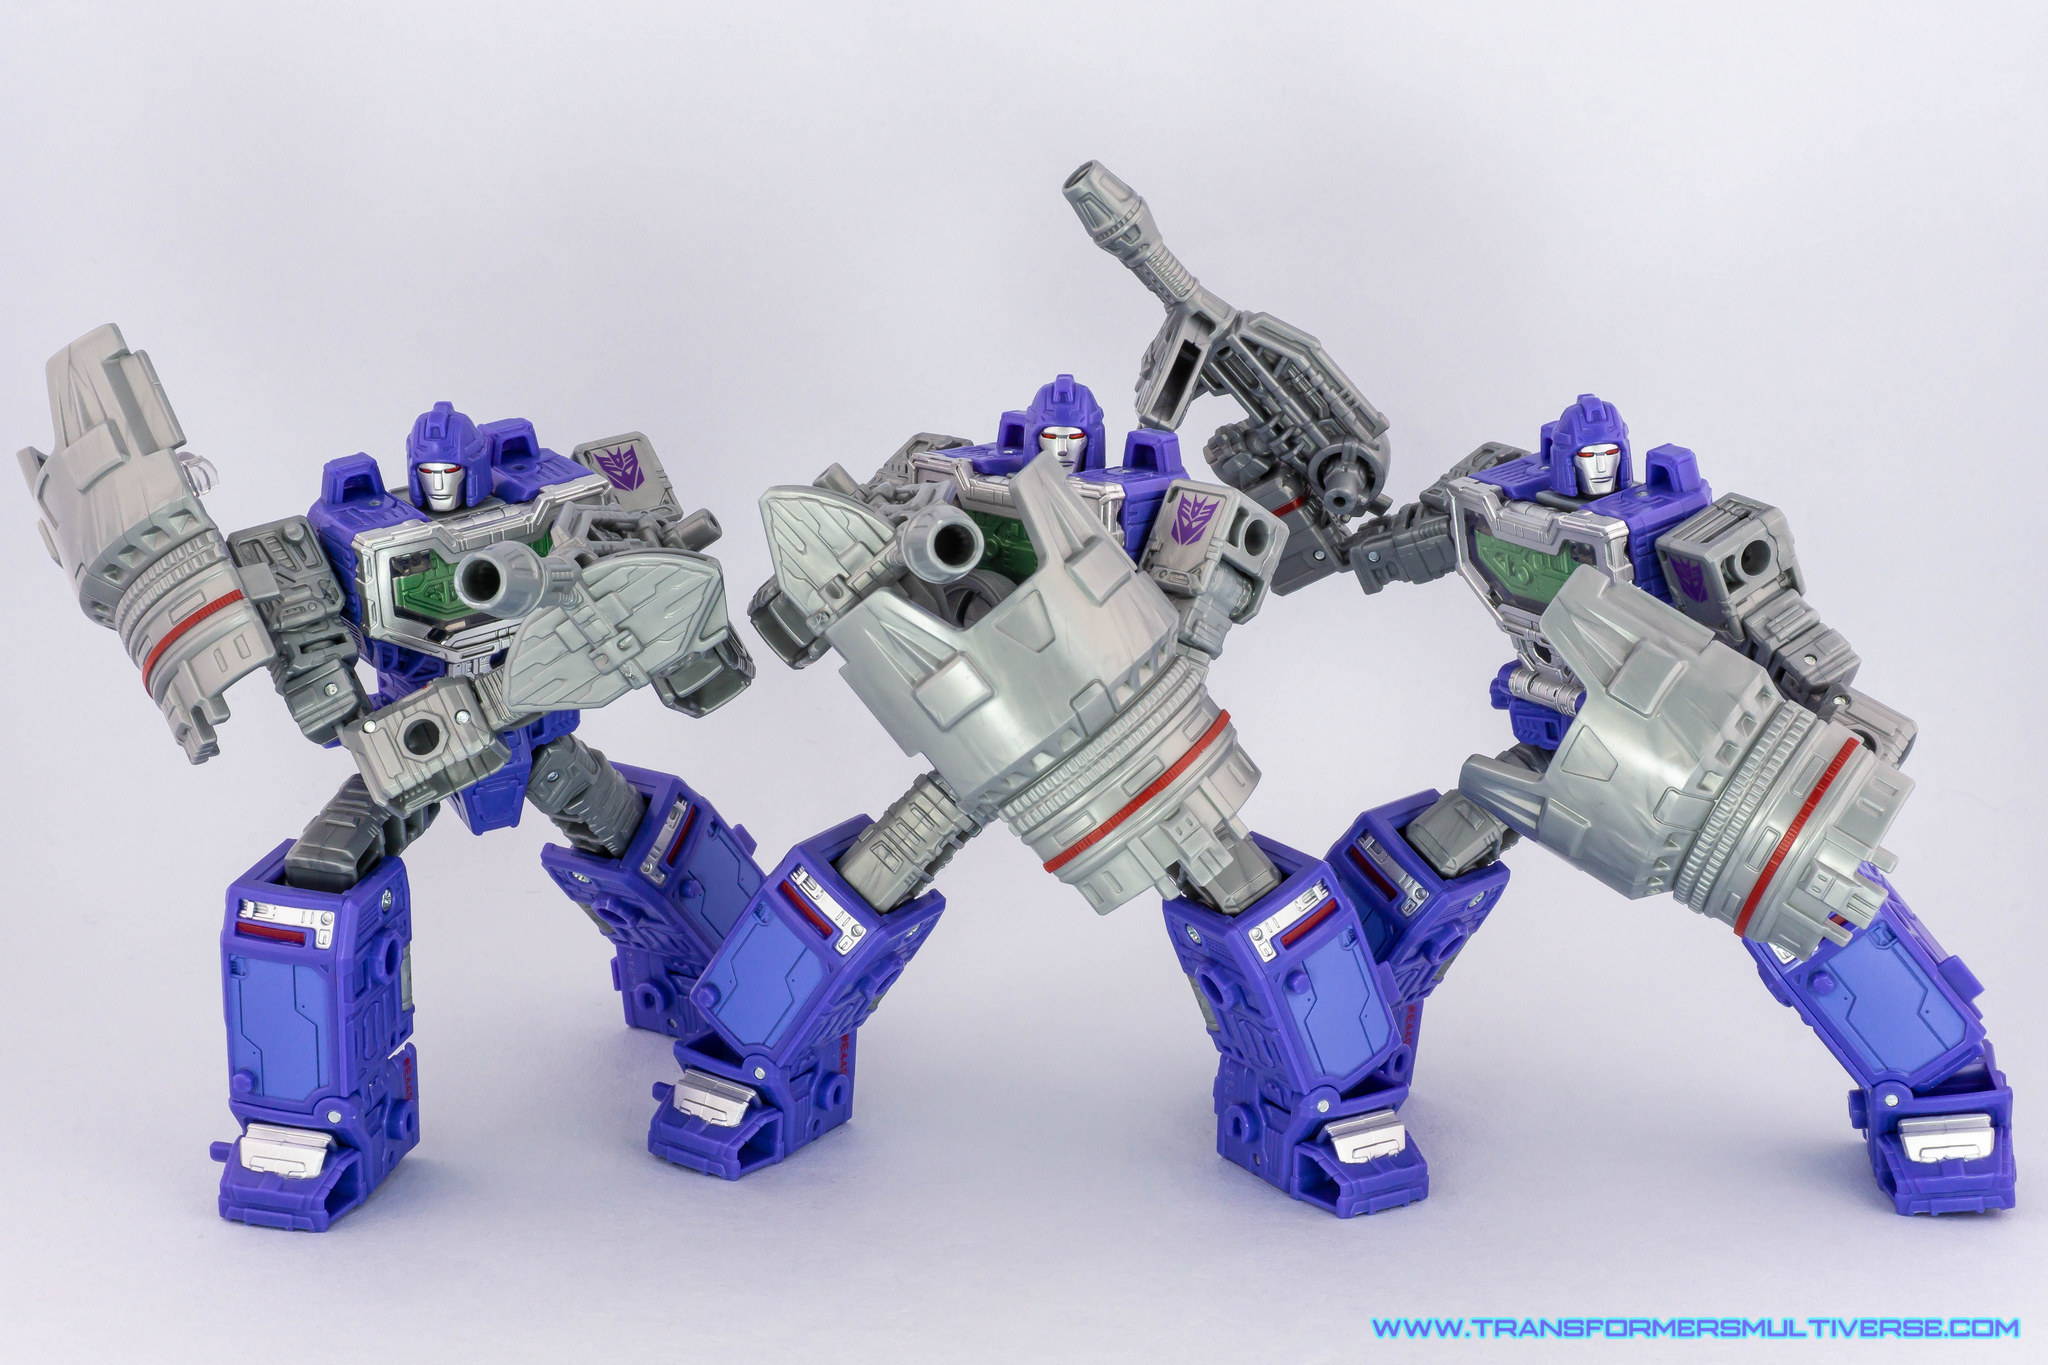 Transformers Siege Refraktor robot mode posed with blast shields 2